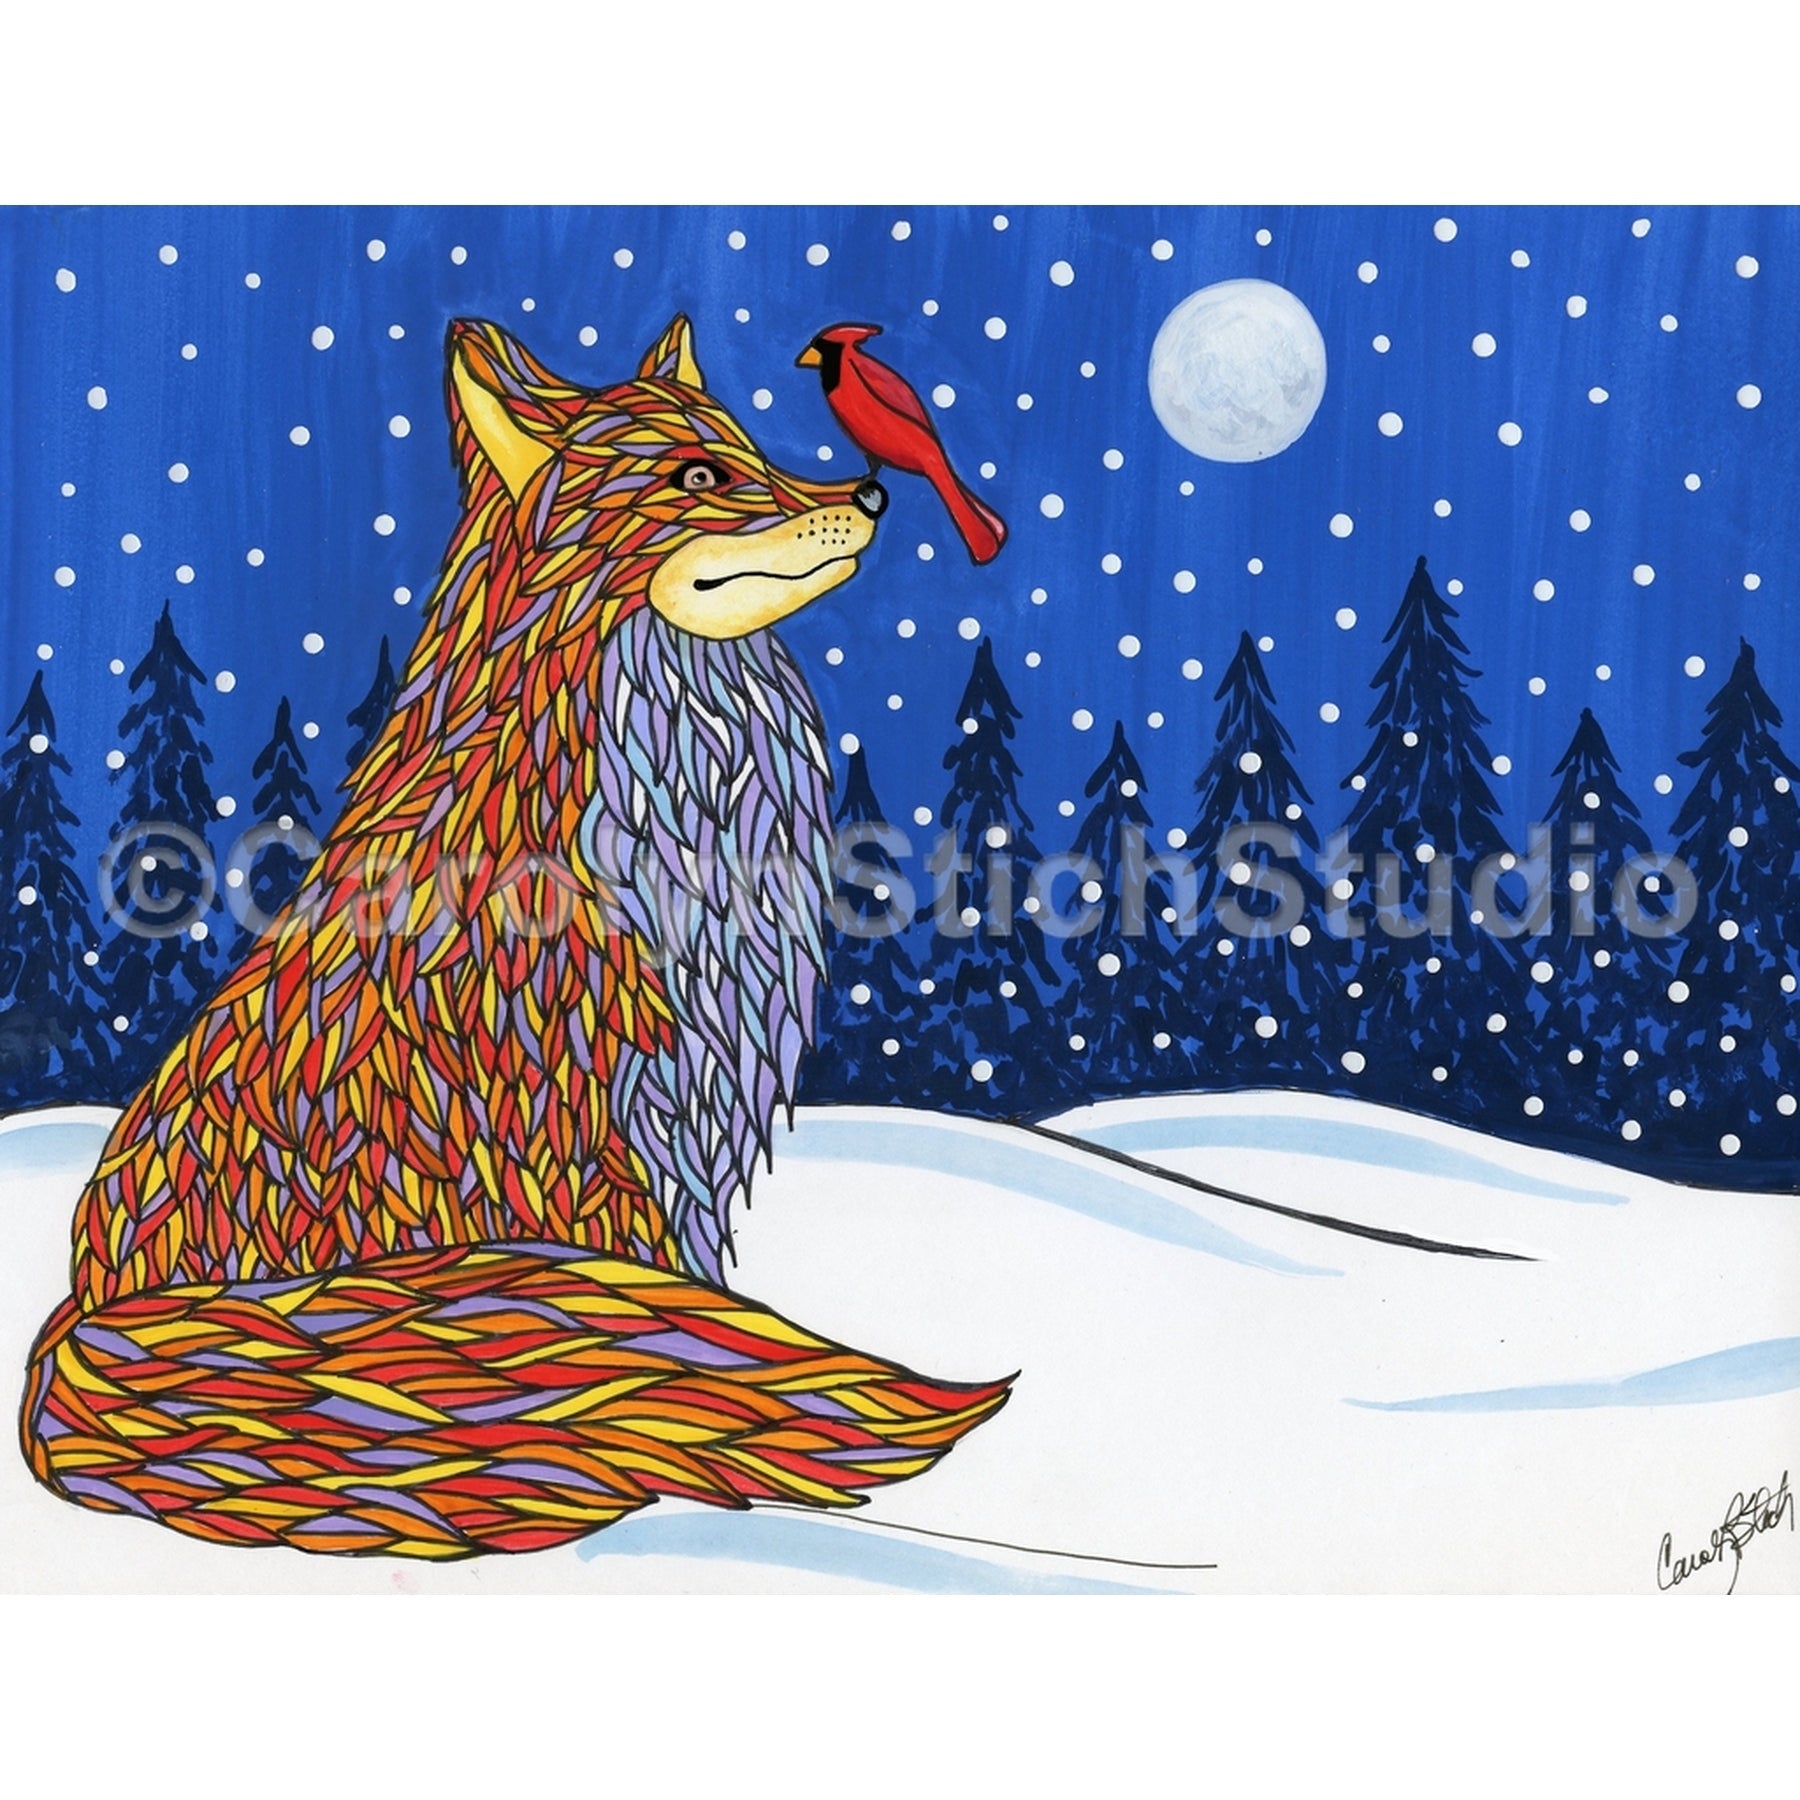 Winter Fox, rug hooking pattern